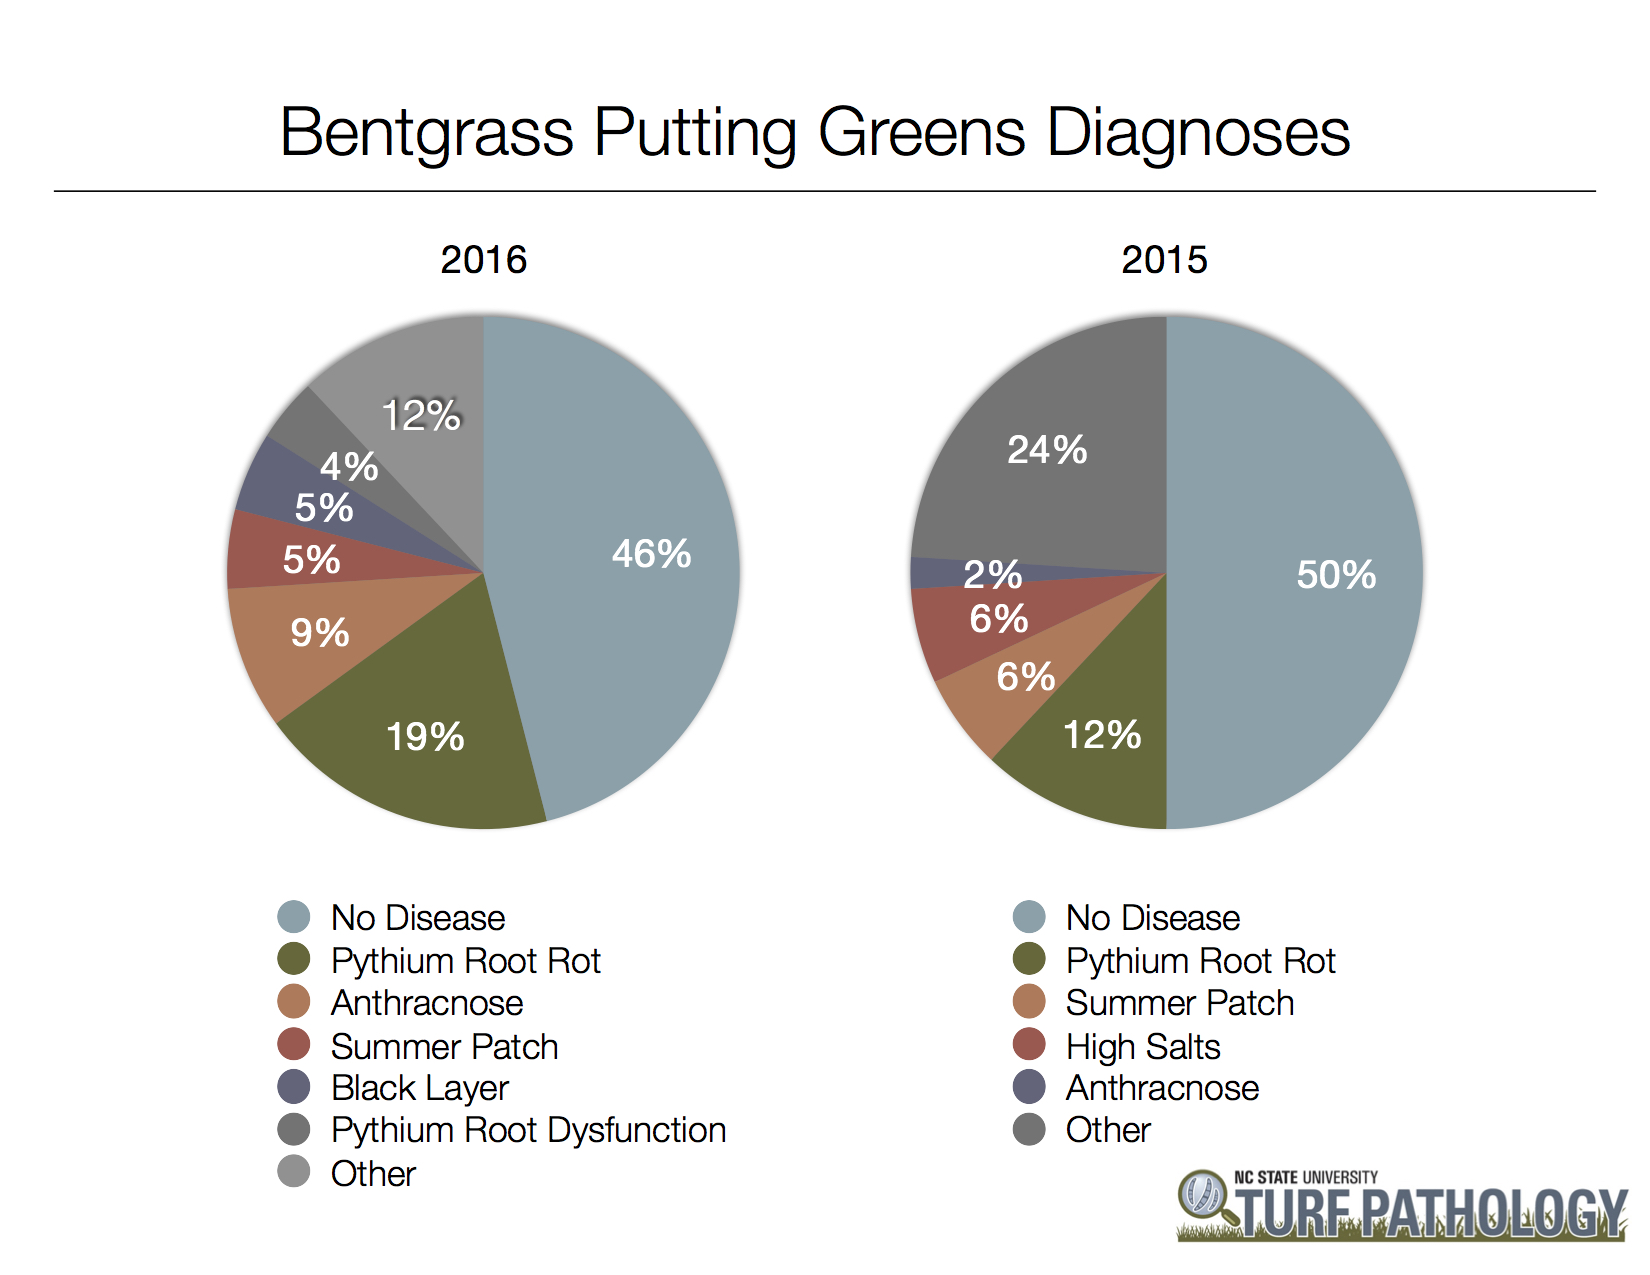 Bentgrass putting greens diagnoses